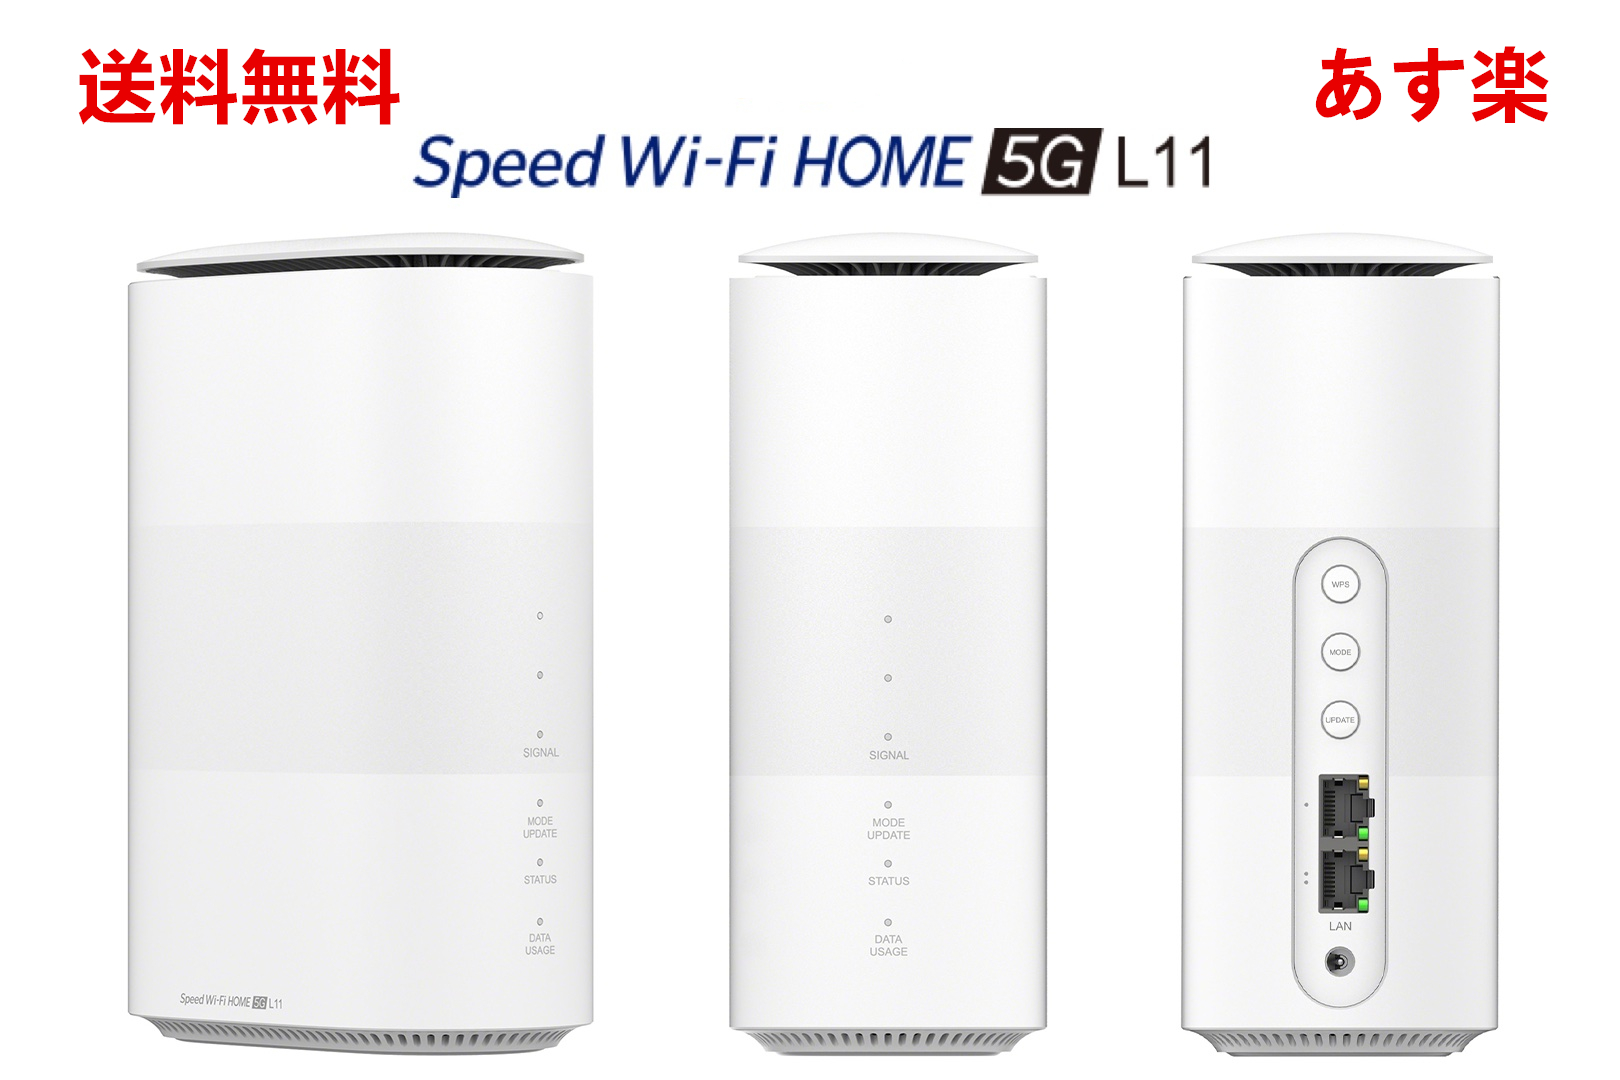 専用　Speed Wi-Fi HOME 5G L11 ルーター